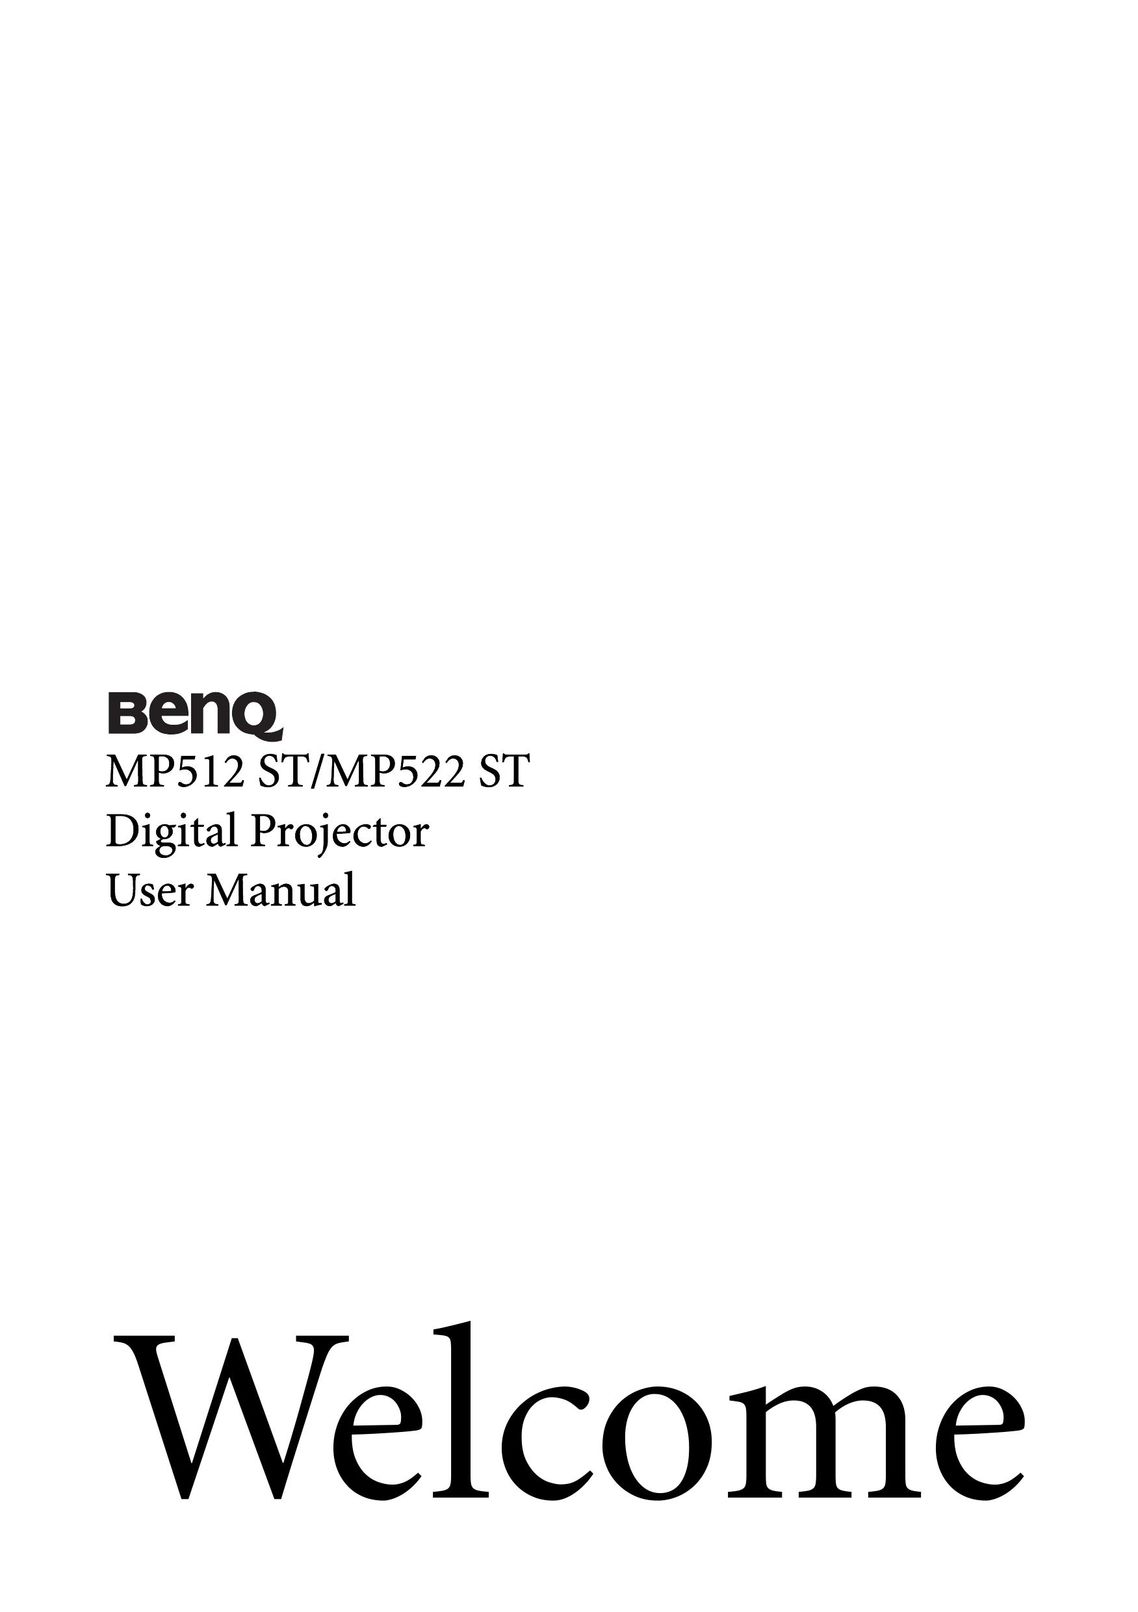 BenQ MP522 ST Projector User Manual